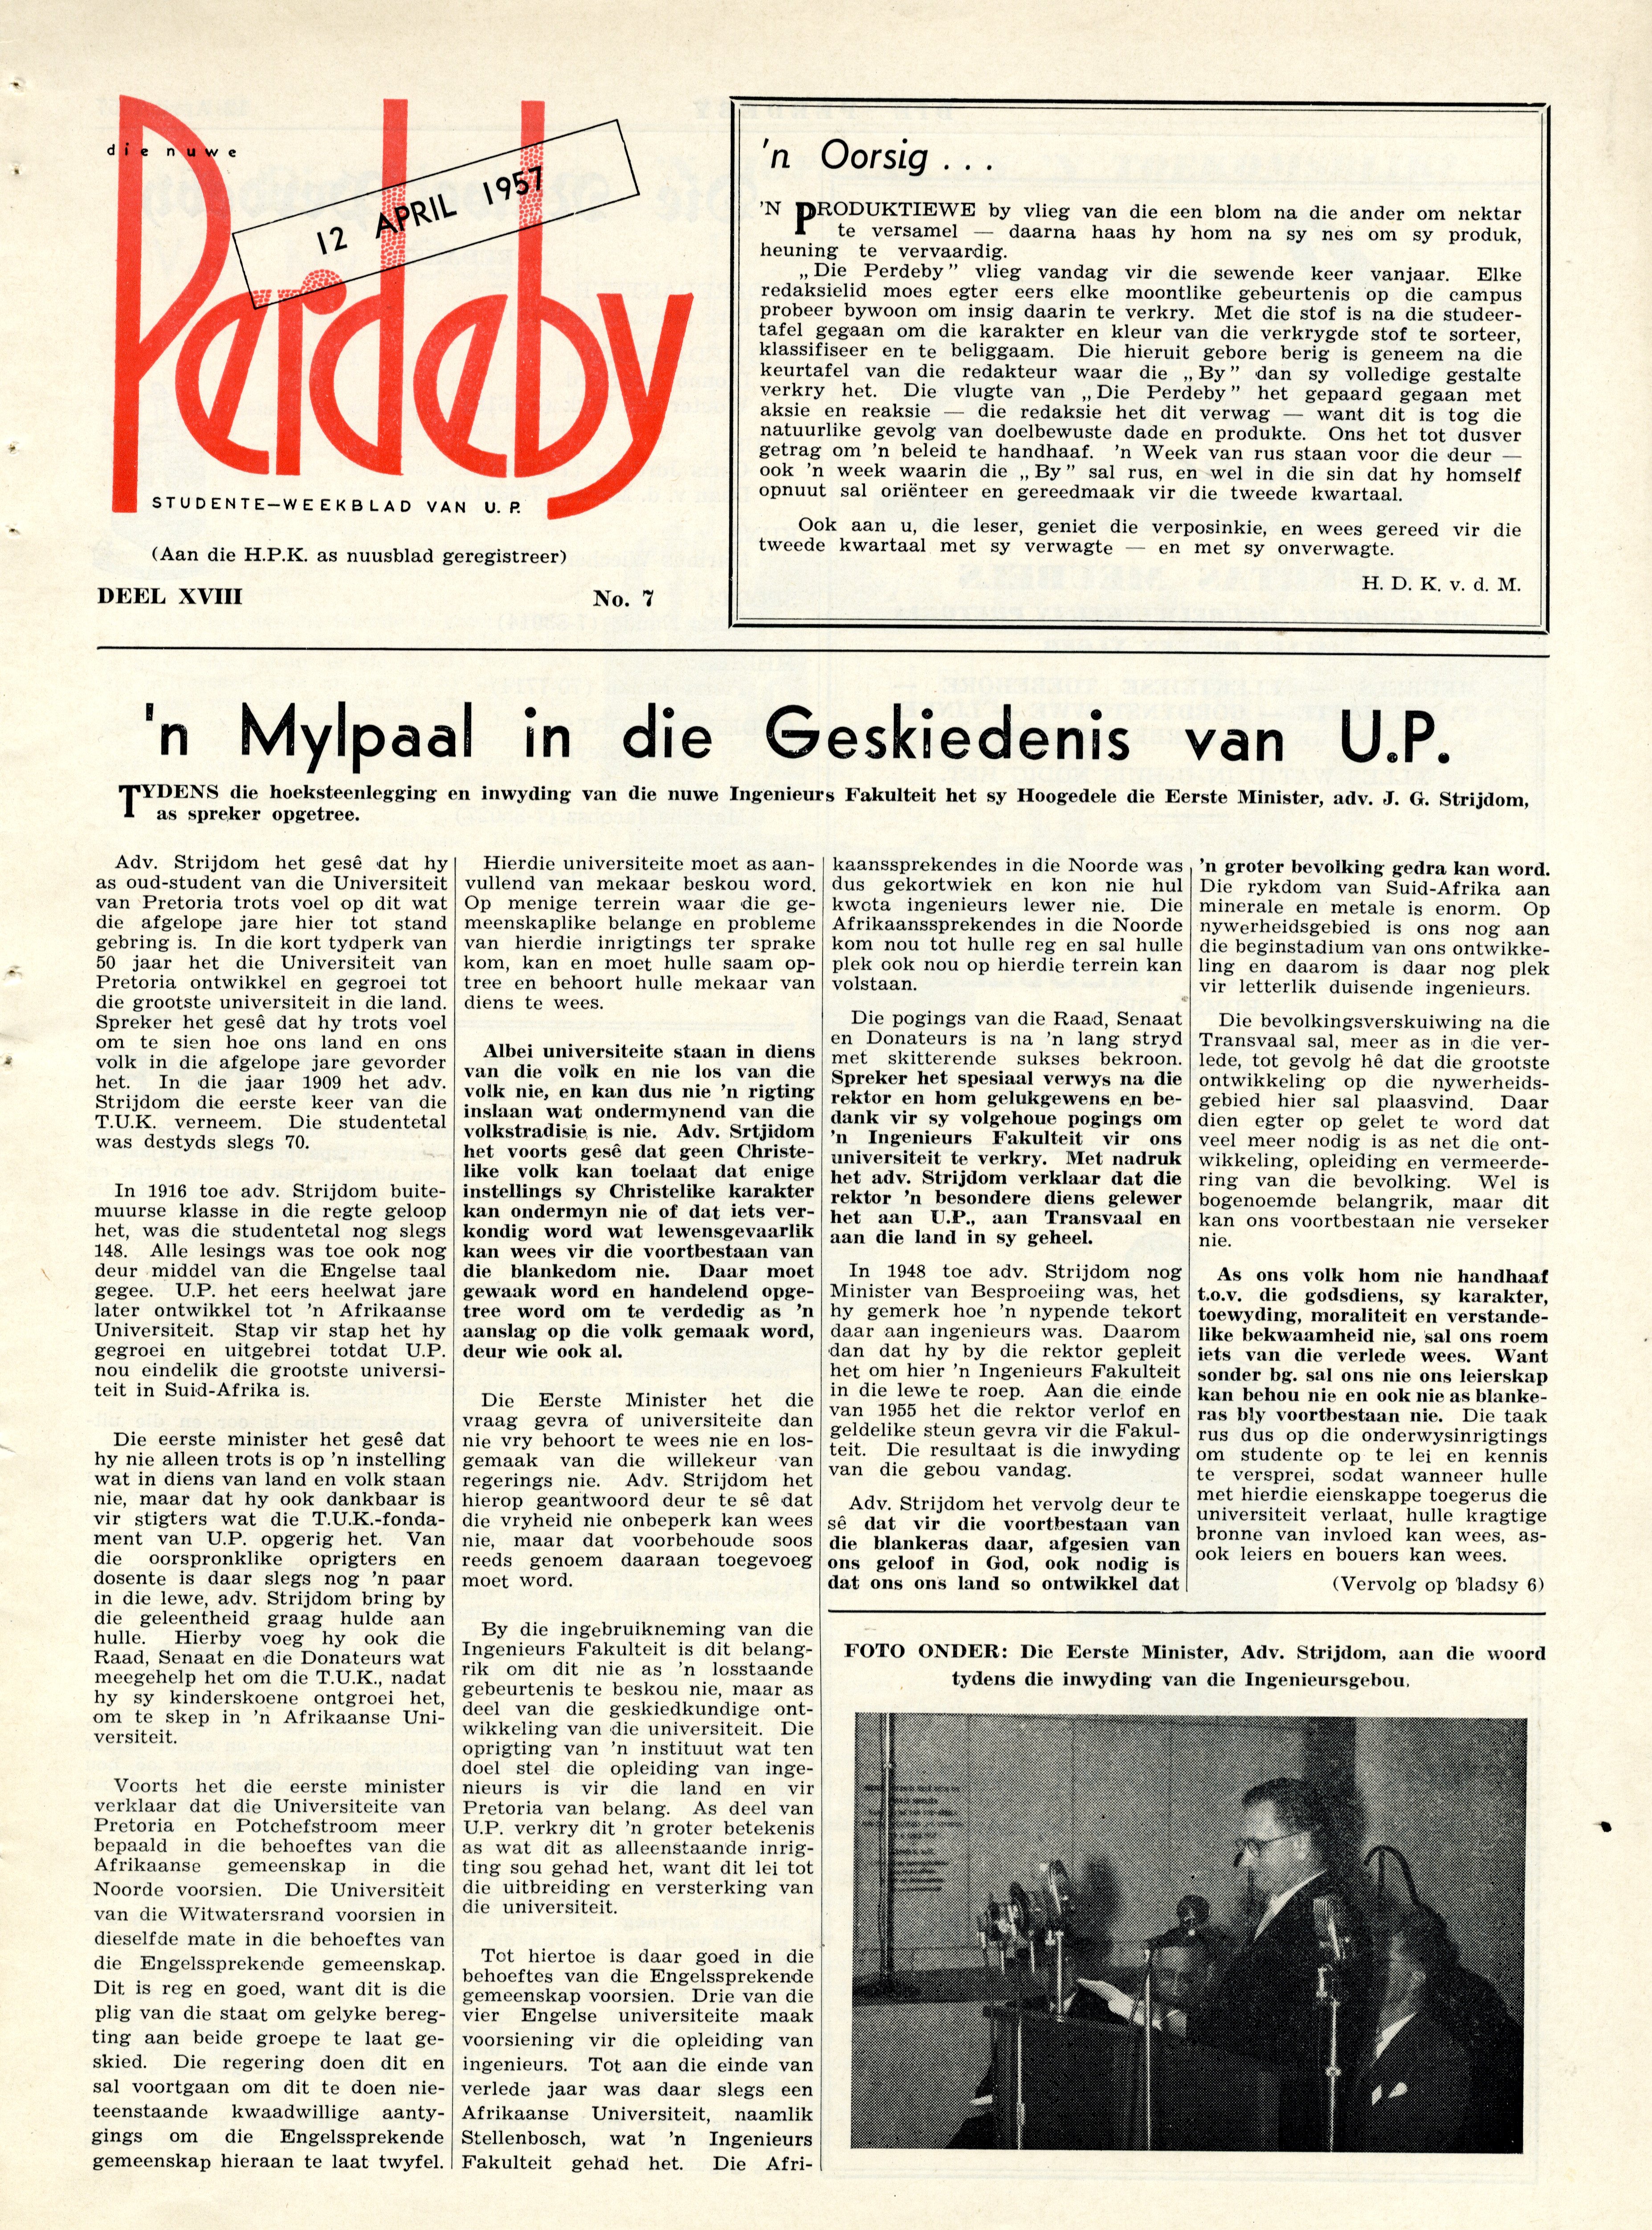 Perdeby 12 April 1957